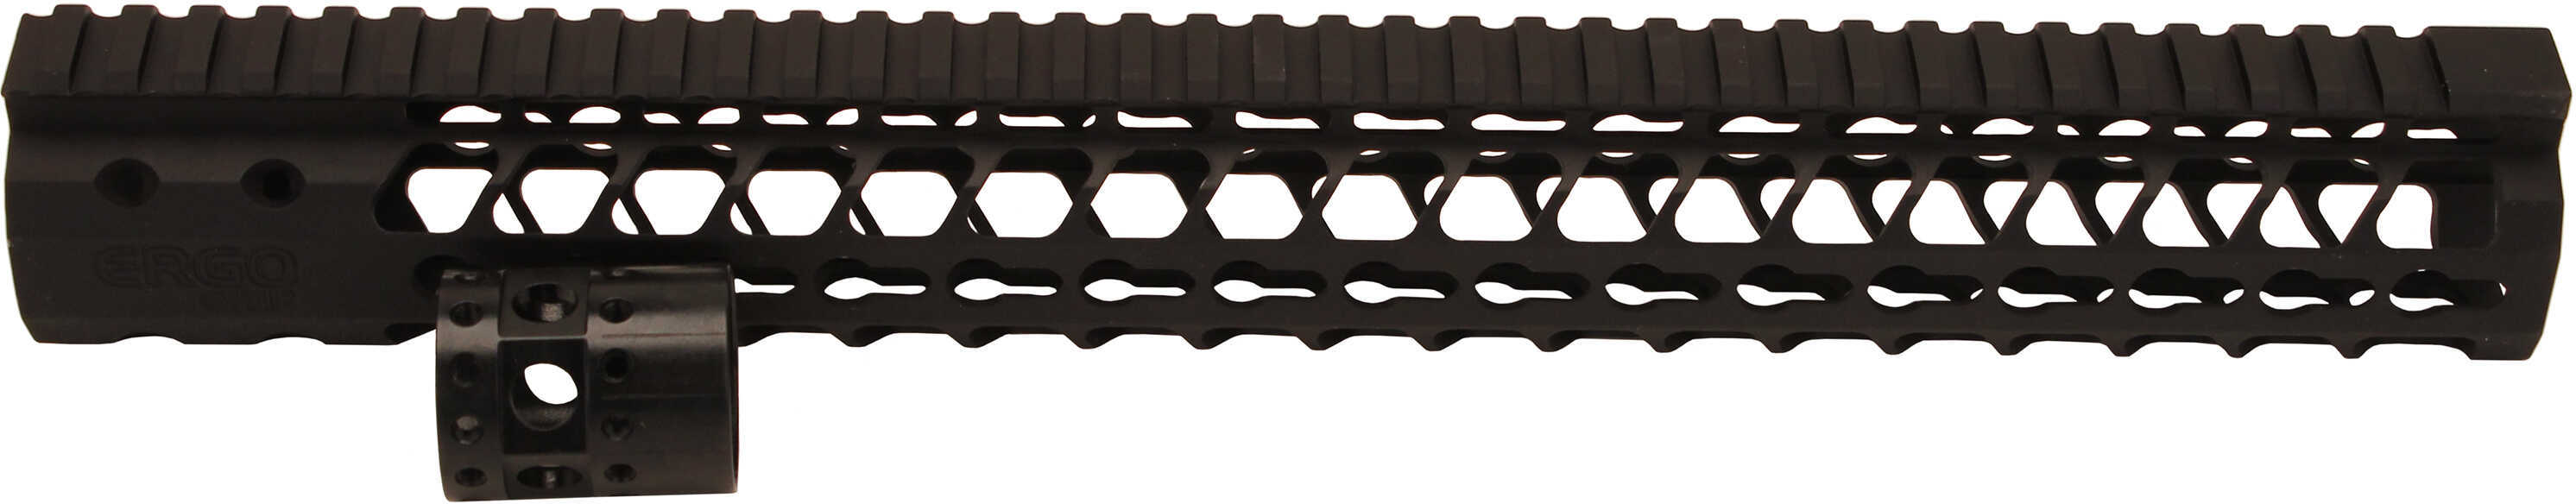 Ergo Grip Superlite Modular KeyMod Rail Fits AR/M4 15" Black Finish 4819-15